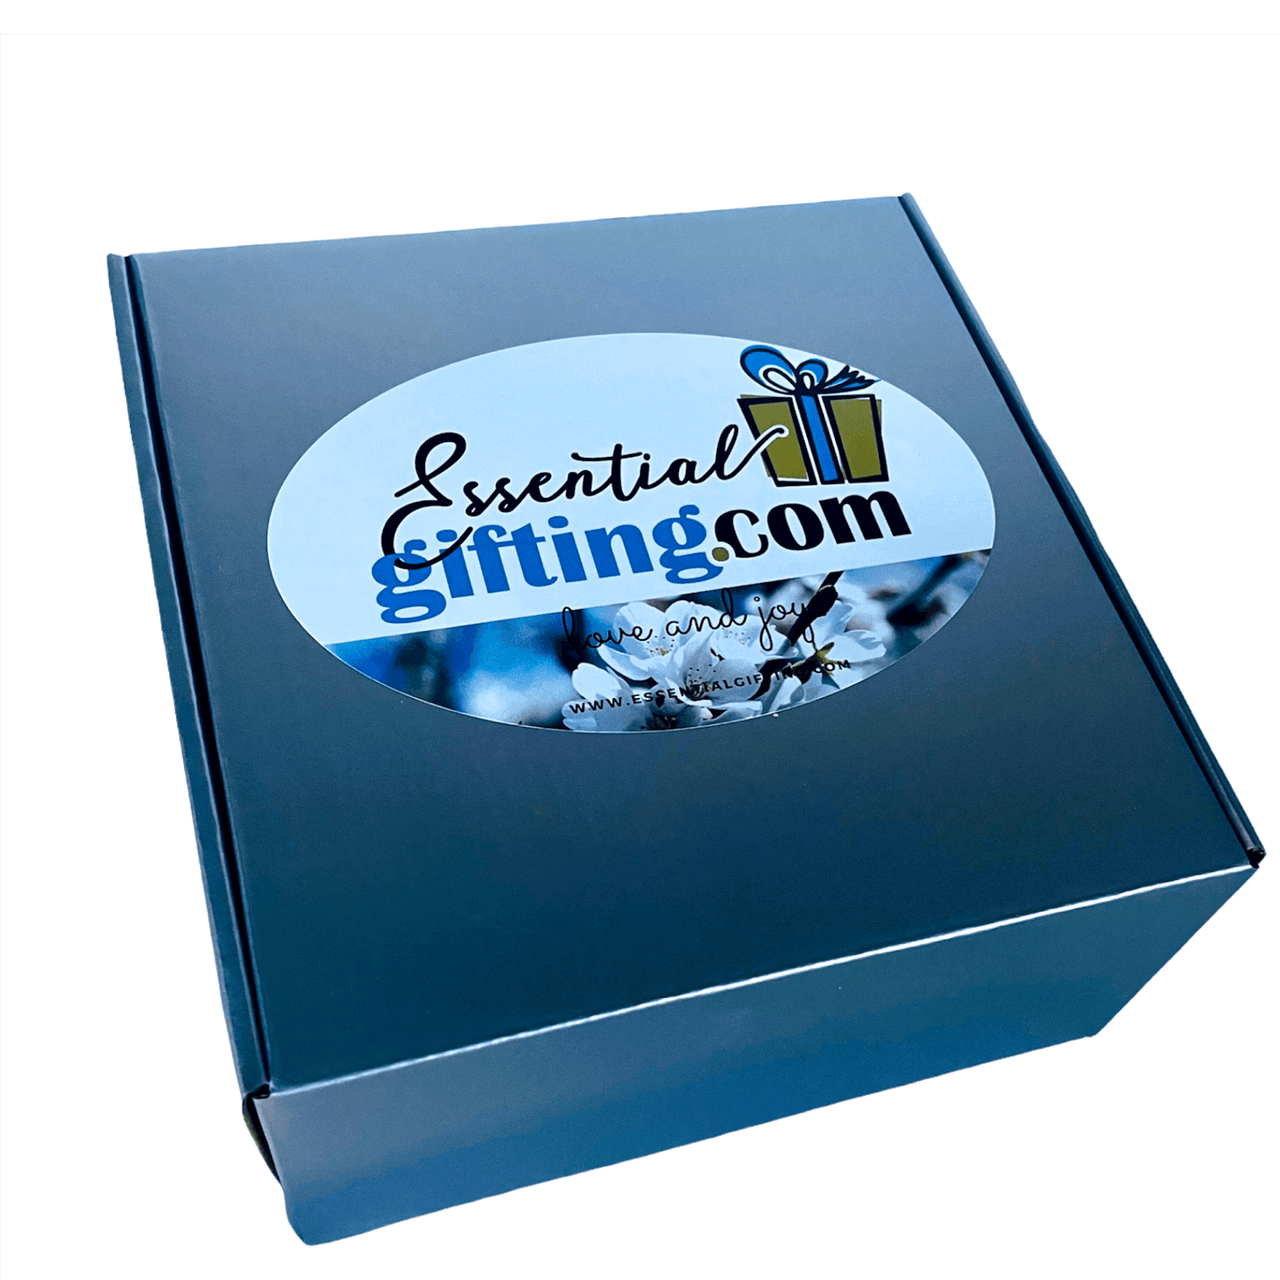 Artisan Bath Care Gift Box by Essentialgifting - Luxurious self-care essentials in a premium presentation box.